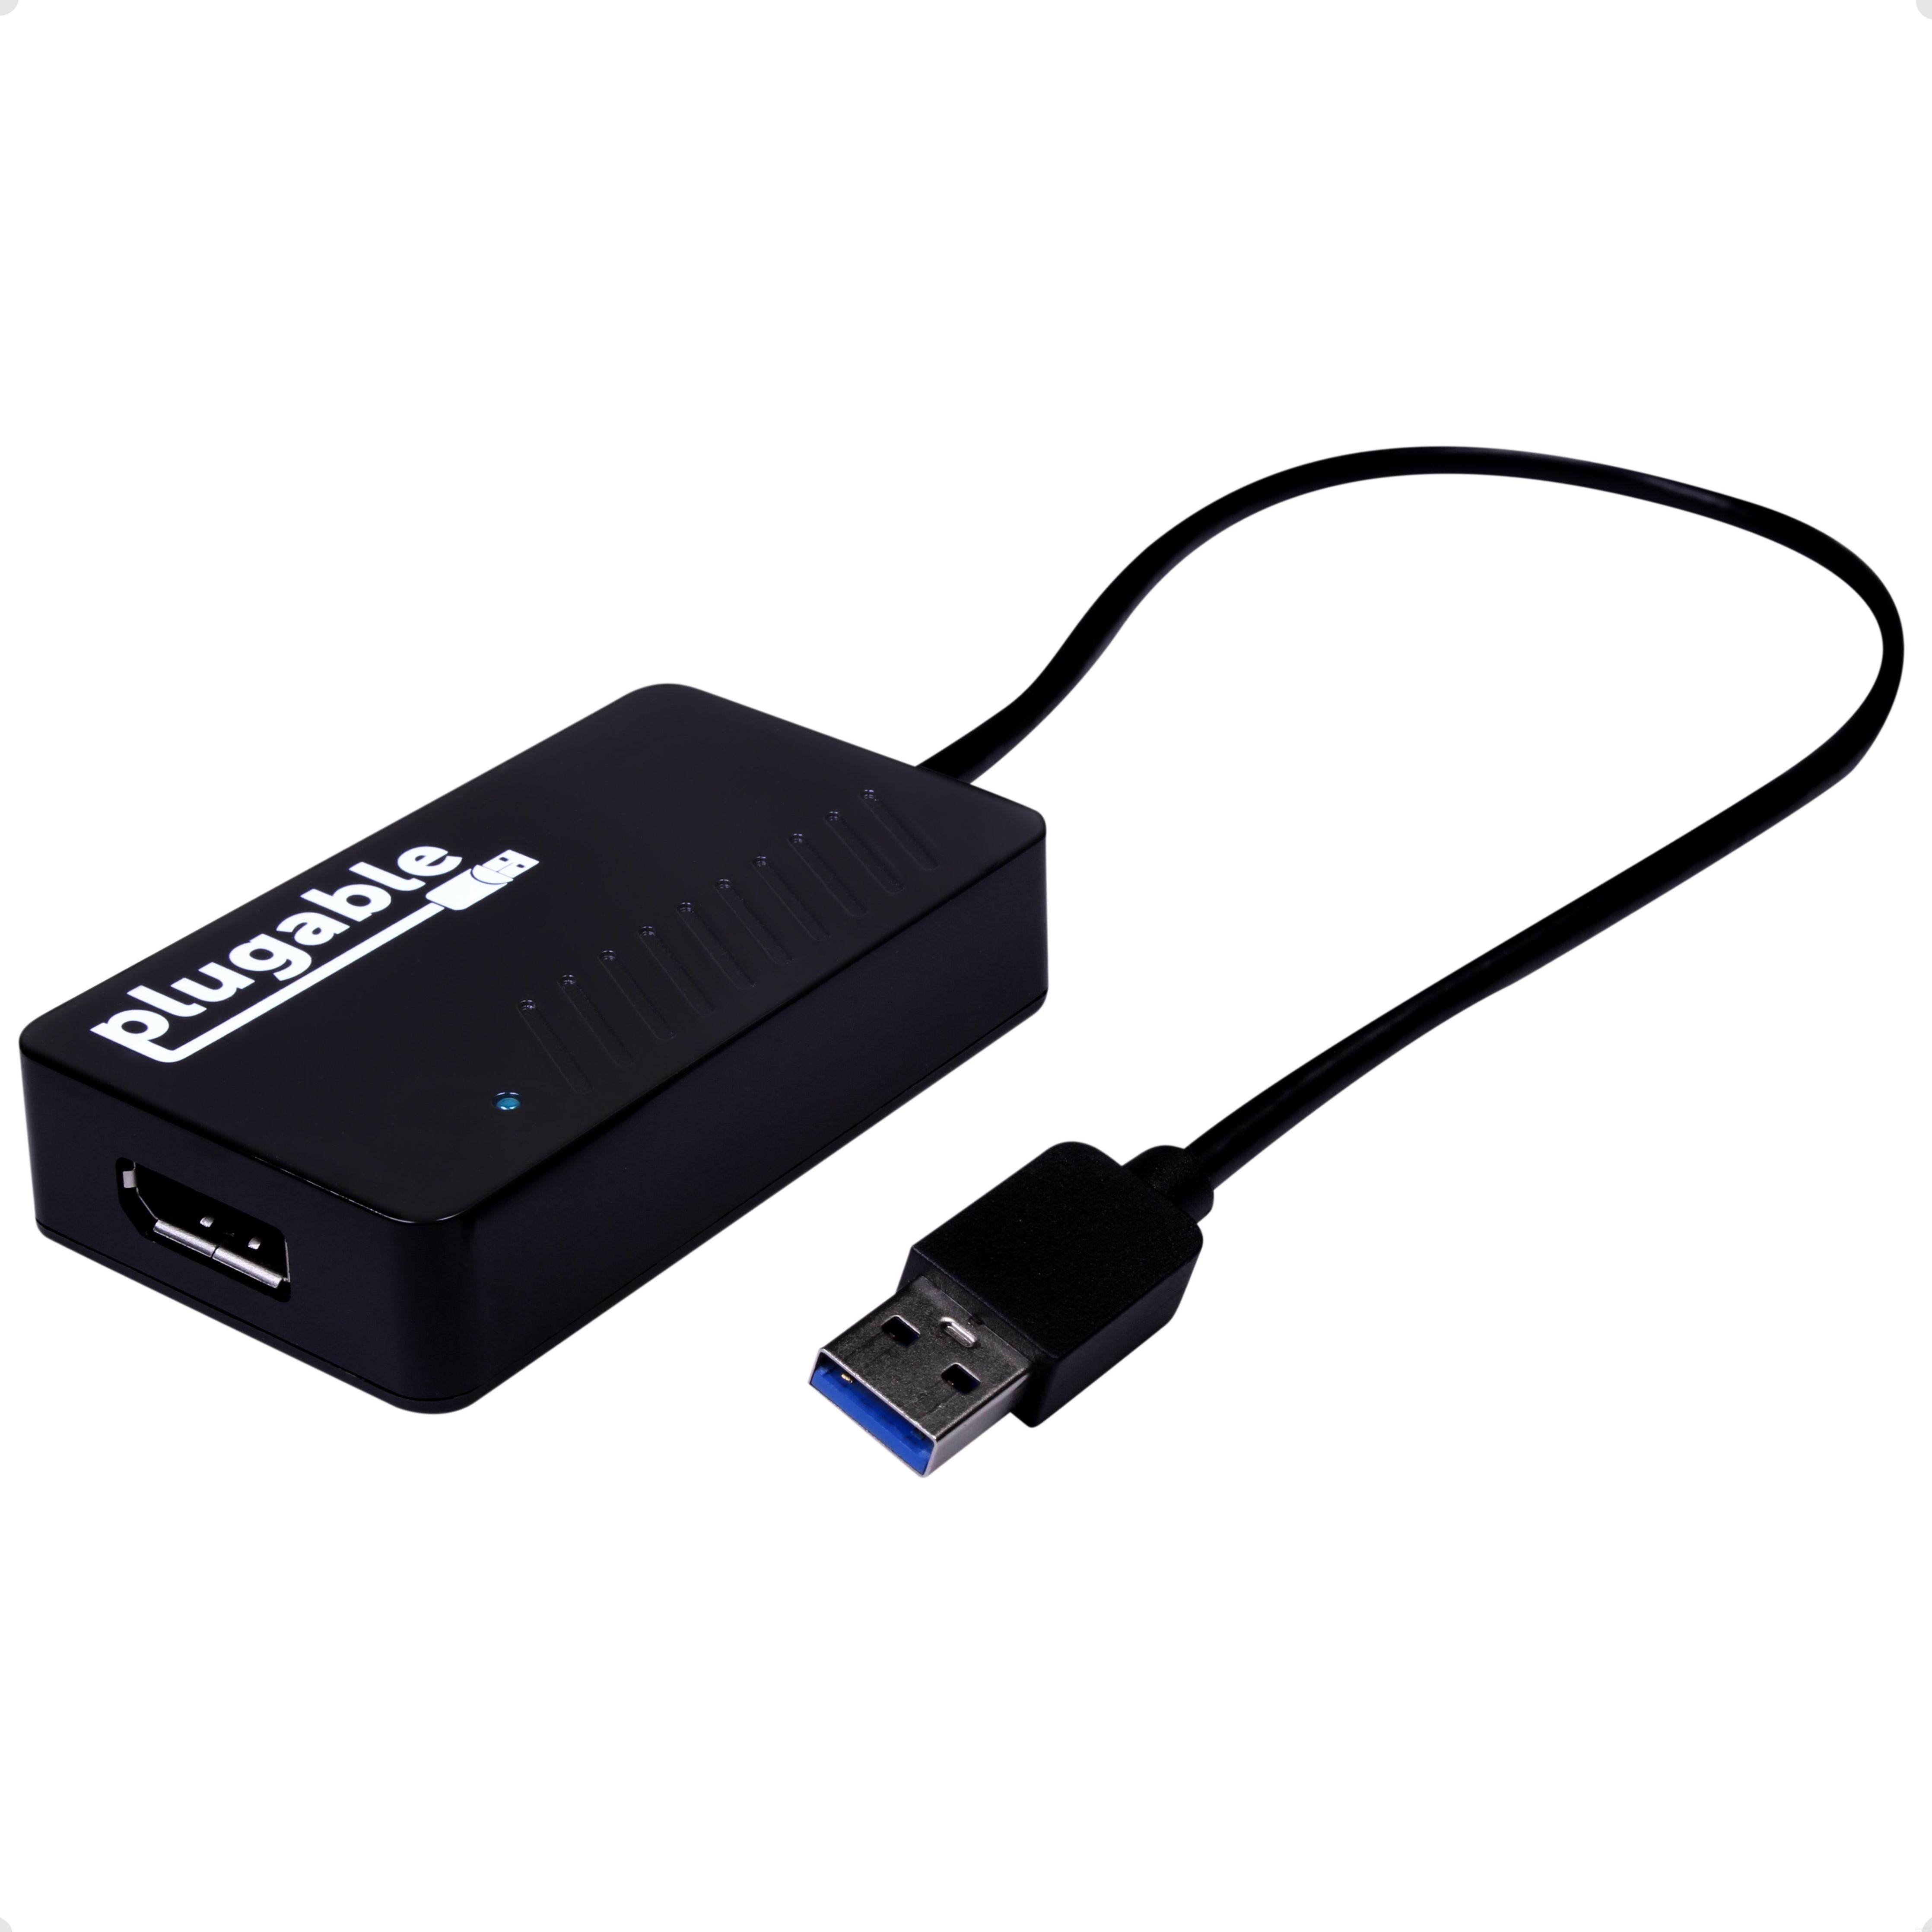 Plugable USB 3.0 4K DisplayPort Adapter for Multiple Monitors